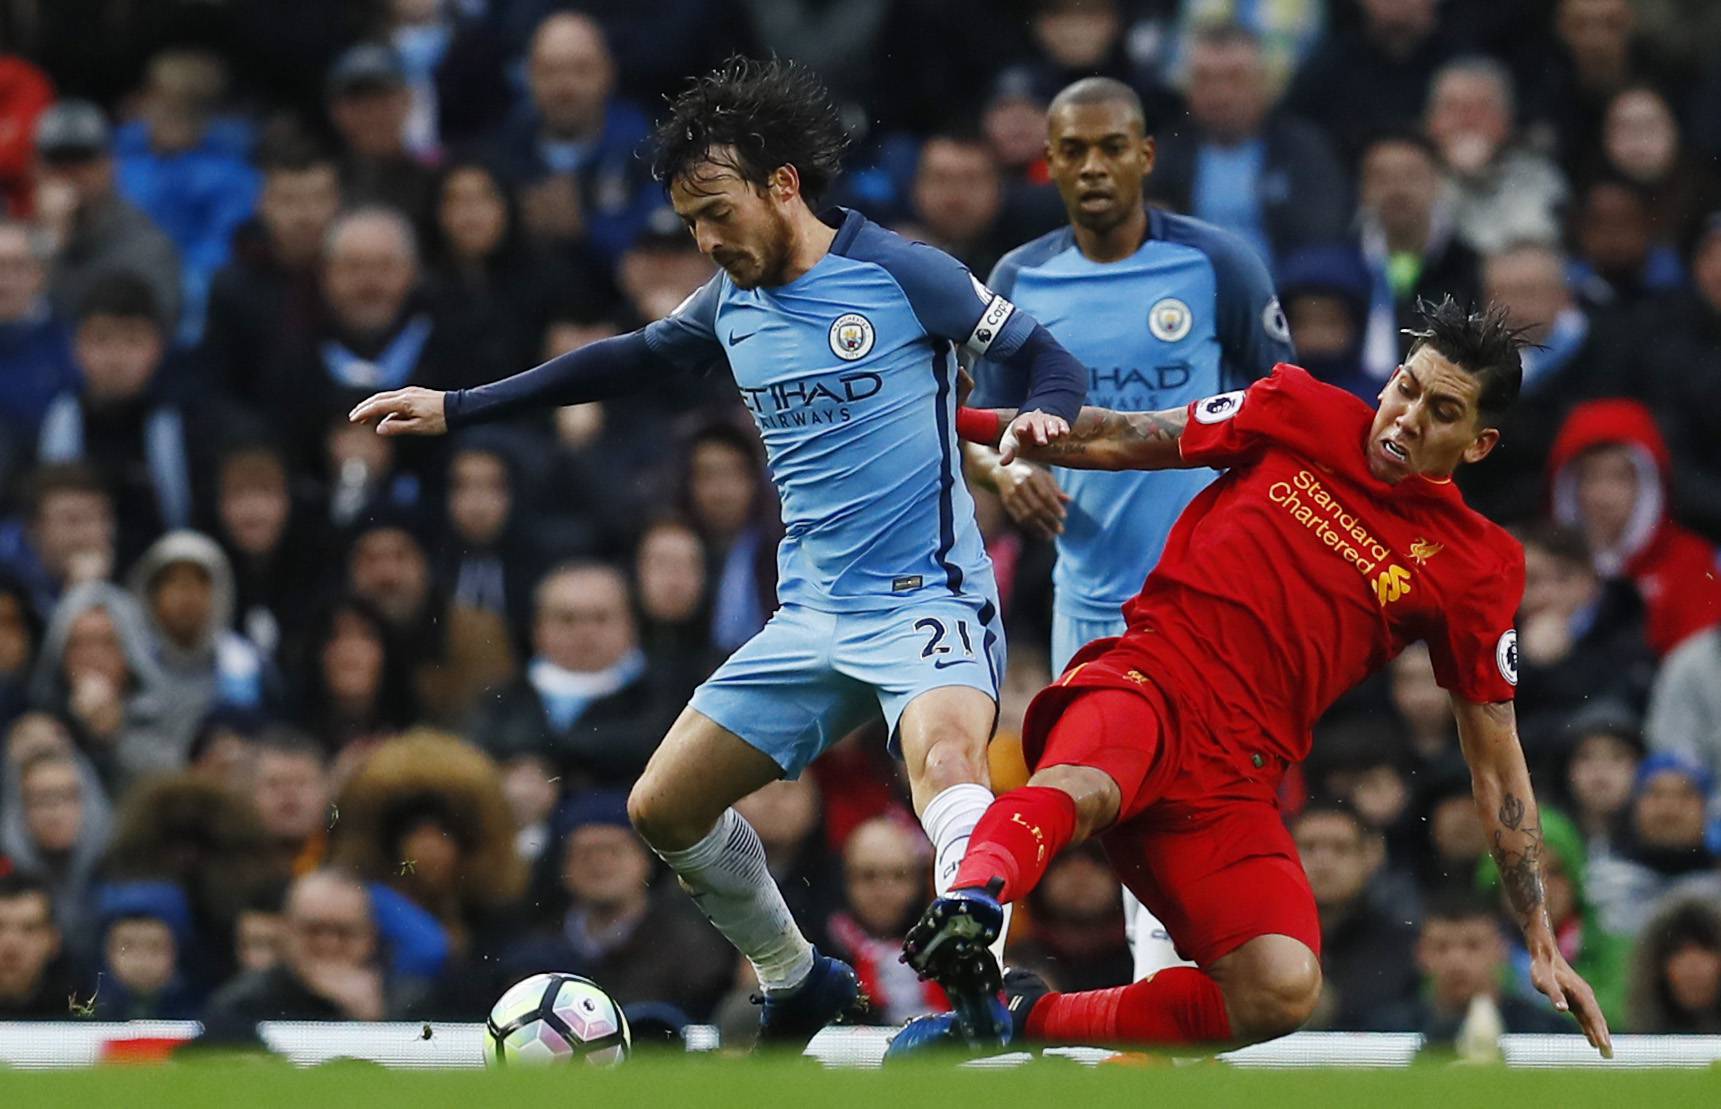 Liverpool's Roberto Firmino fouls Manchester City's David Silva